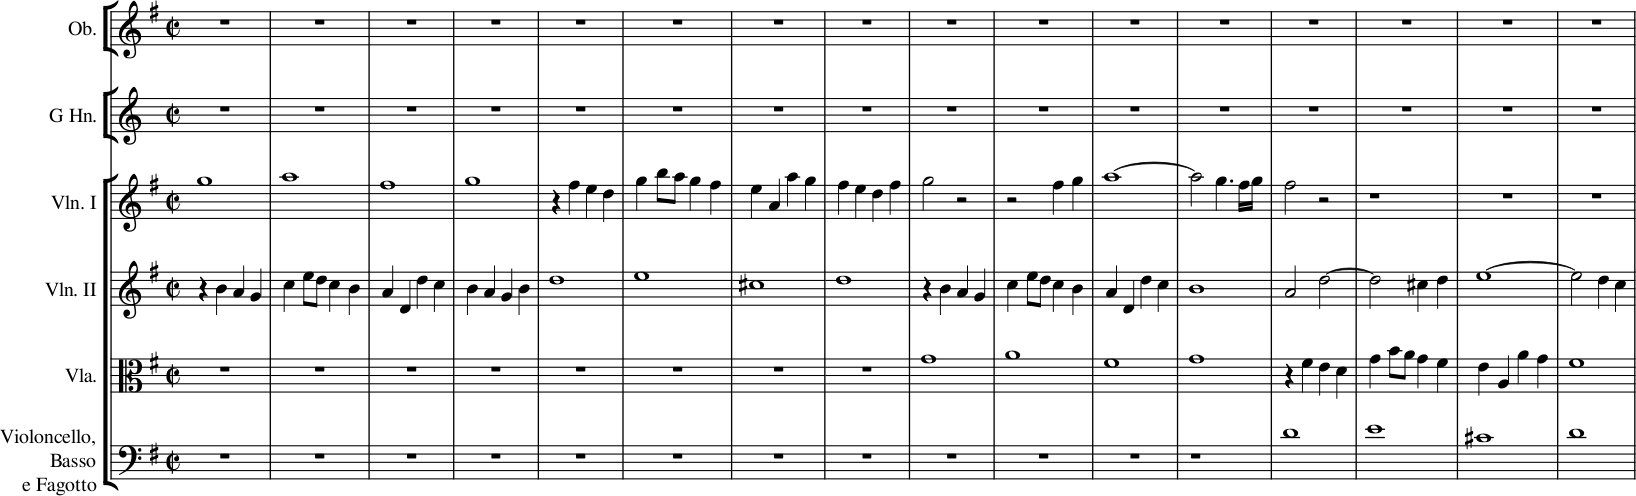 Abbildung Unterquintkanon